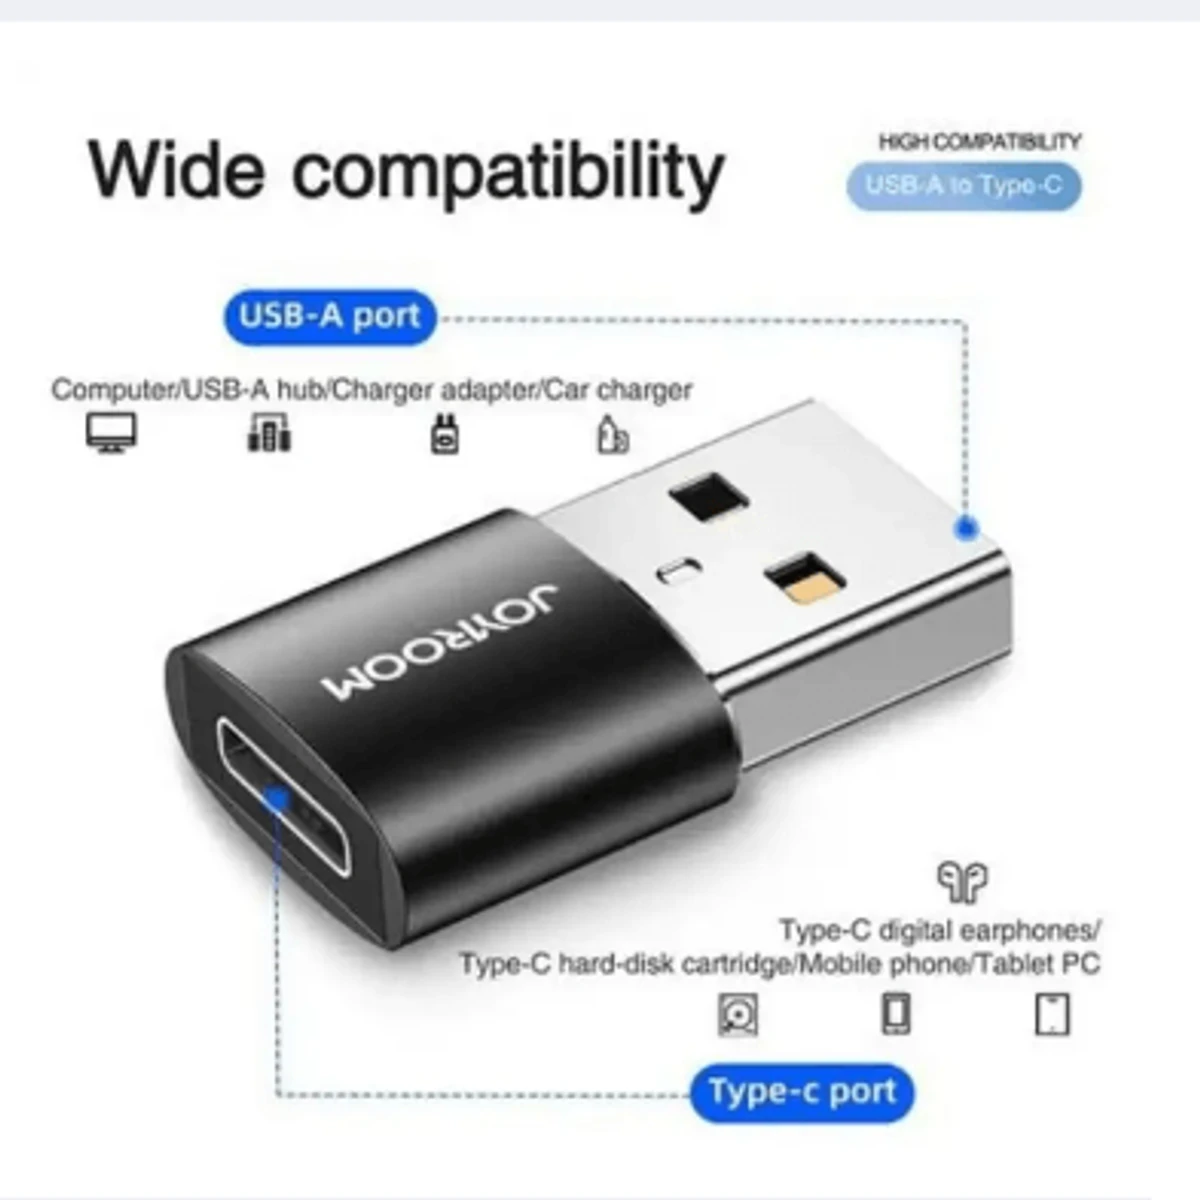 JOYROOM S-H152 USB to Type C OTG Adapter USB Male to USB-C Female Converter for Laptop Mobile Phone (2Pcs)